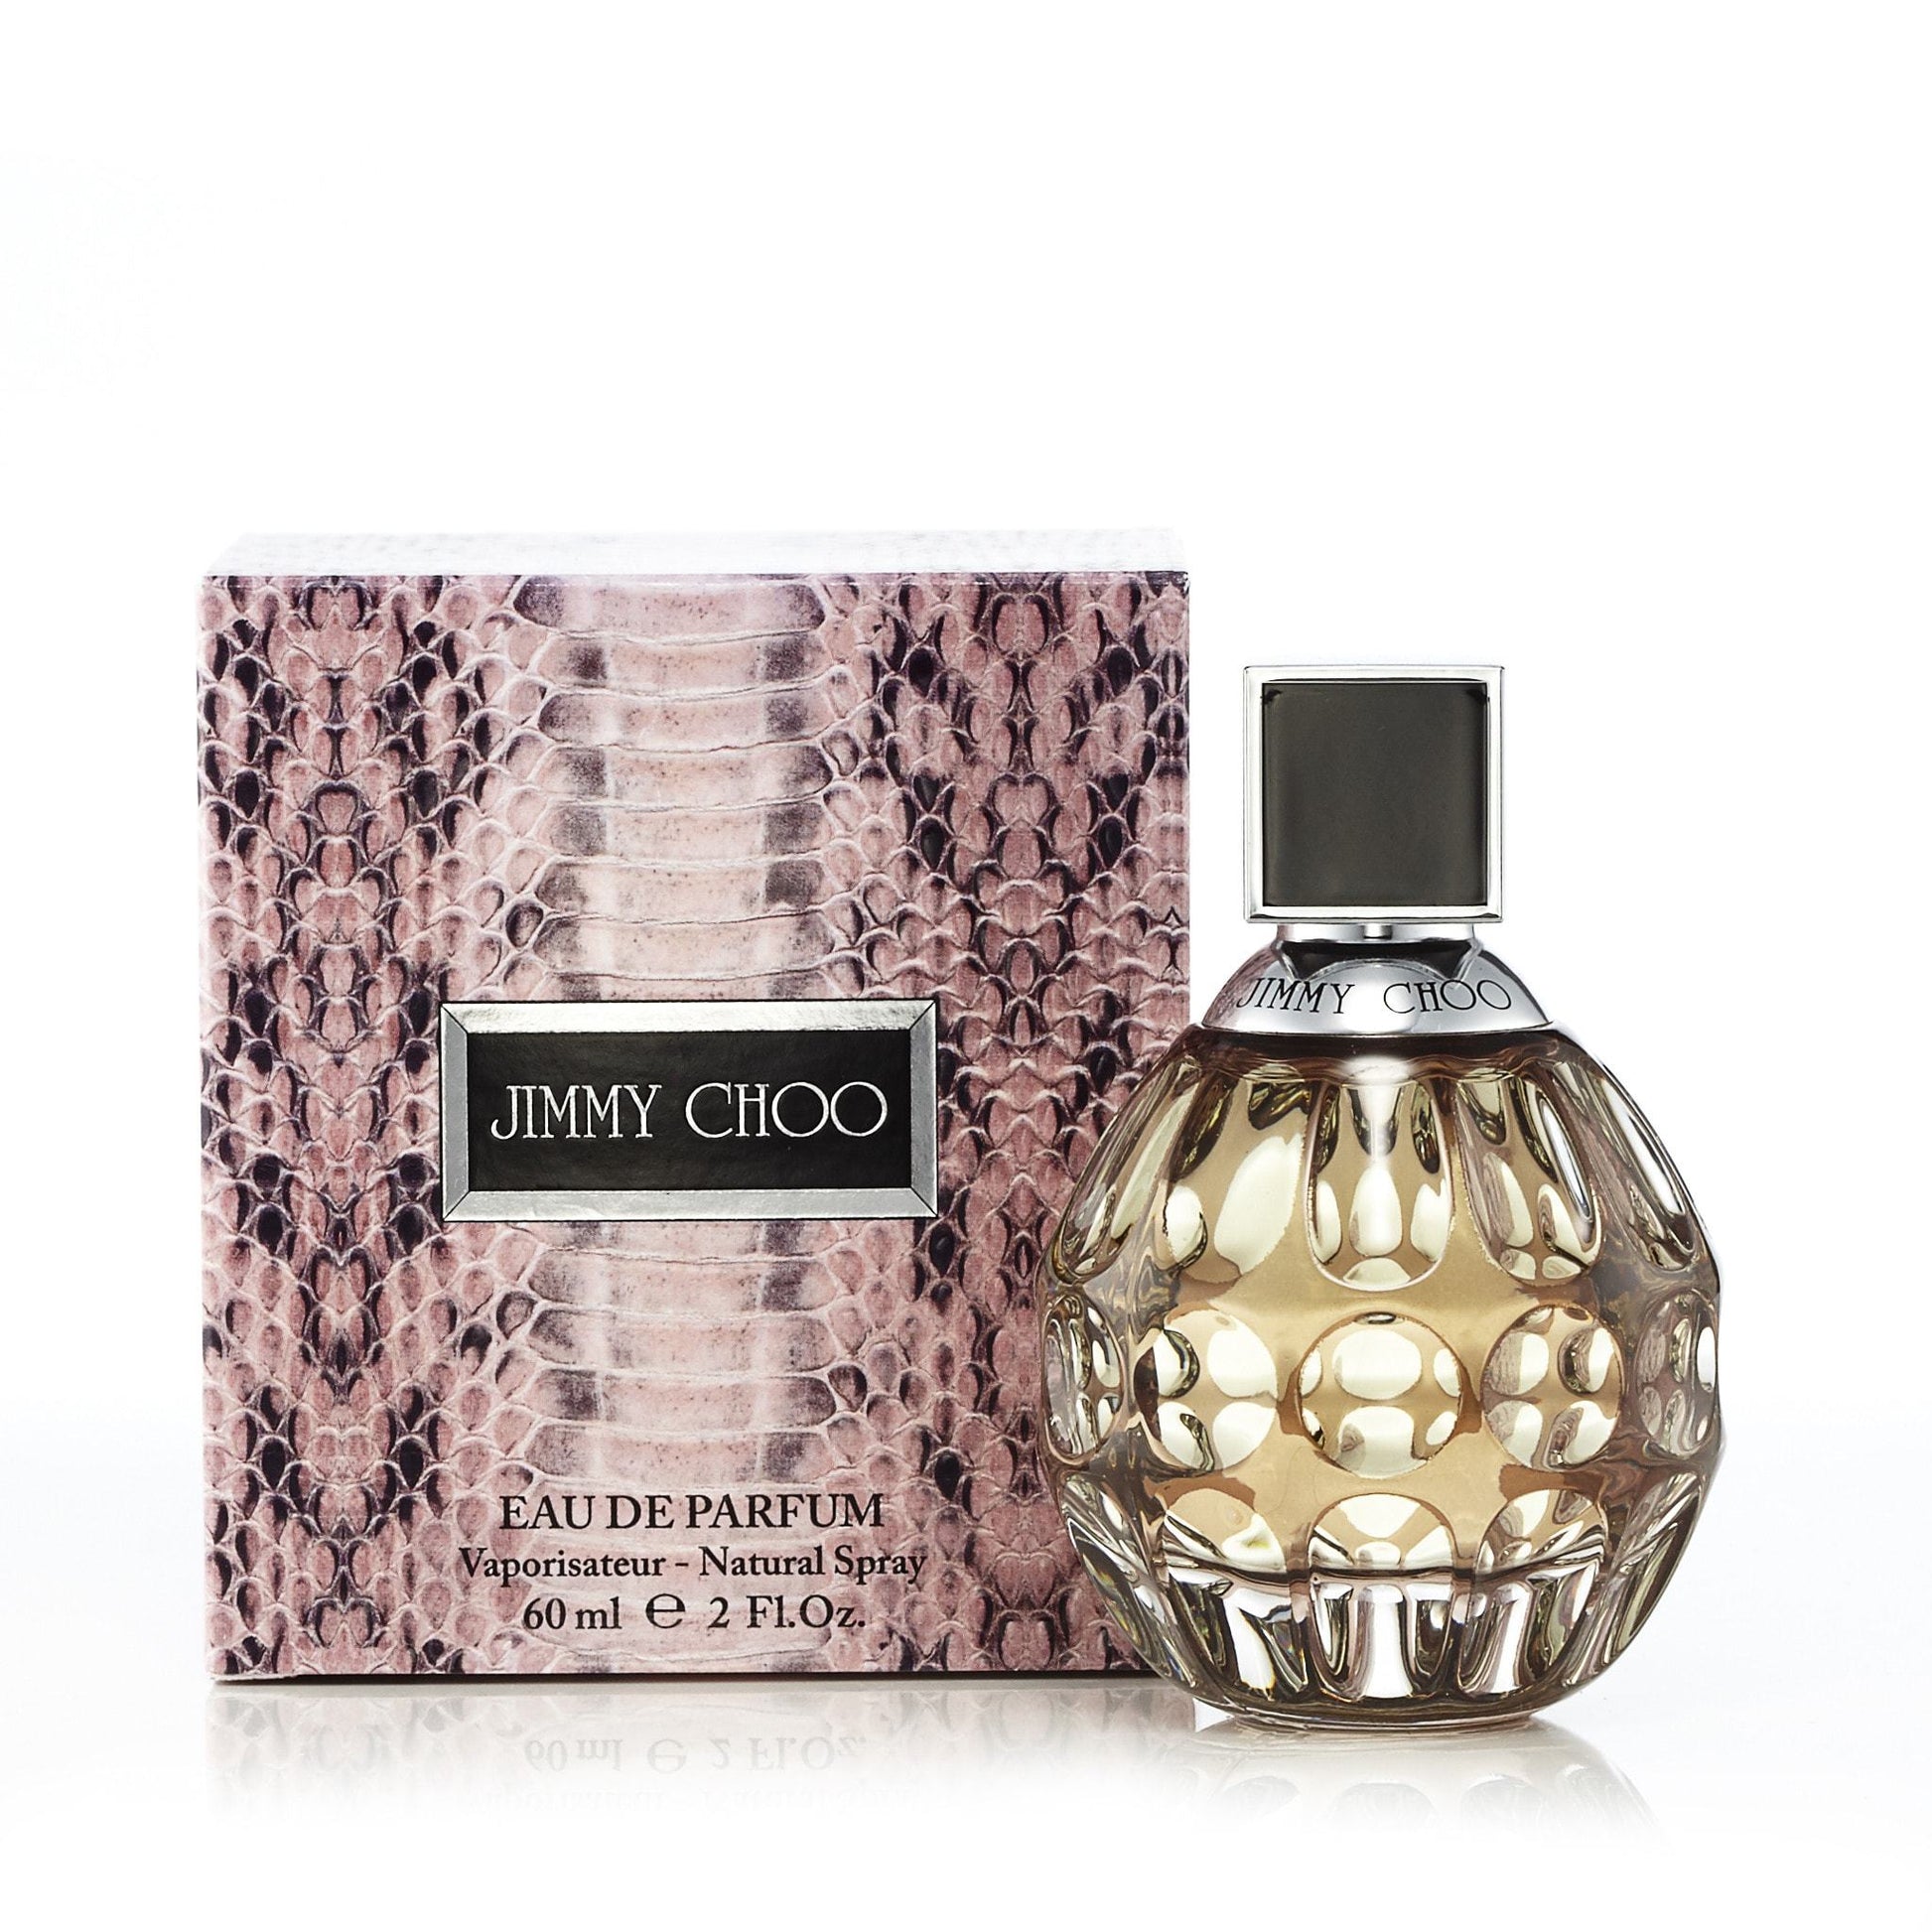 Jimmy Choo Eau de Parfum Spray for Women by Jimmy Choo, Product image 1